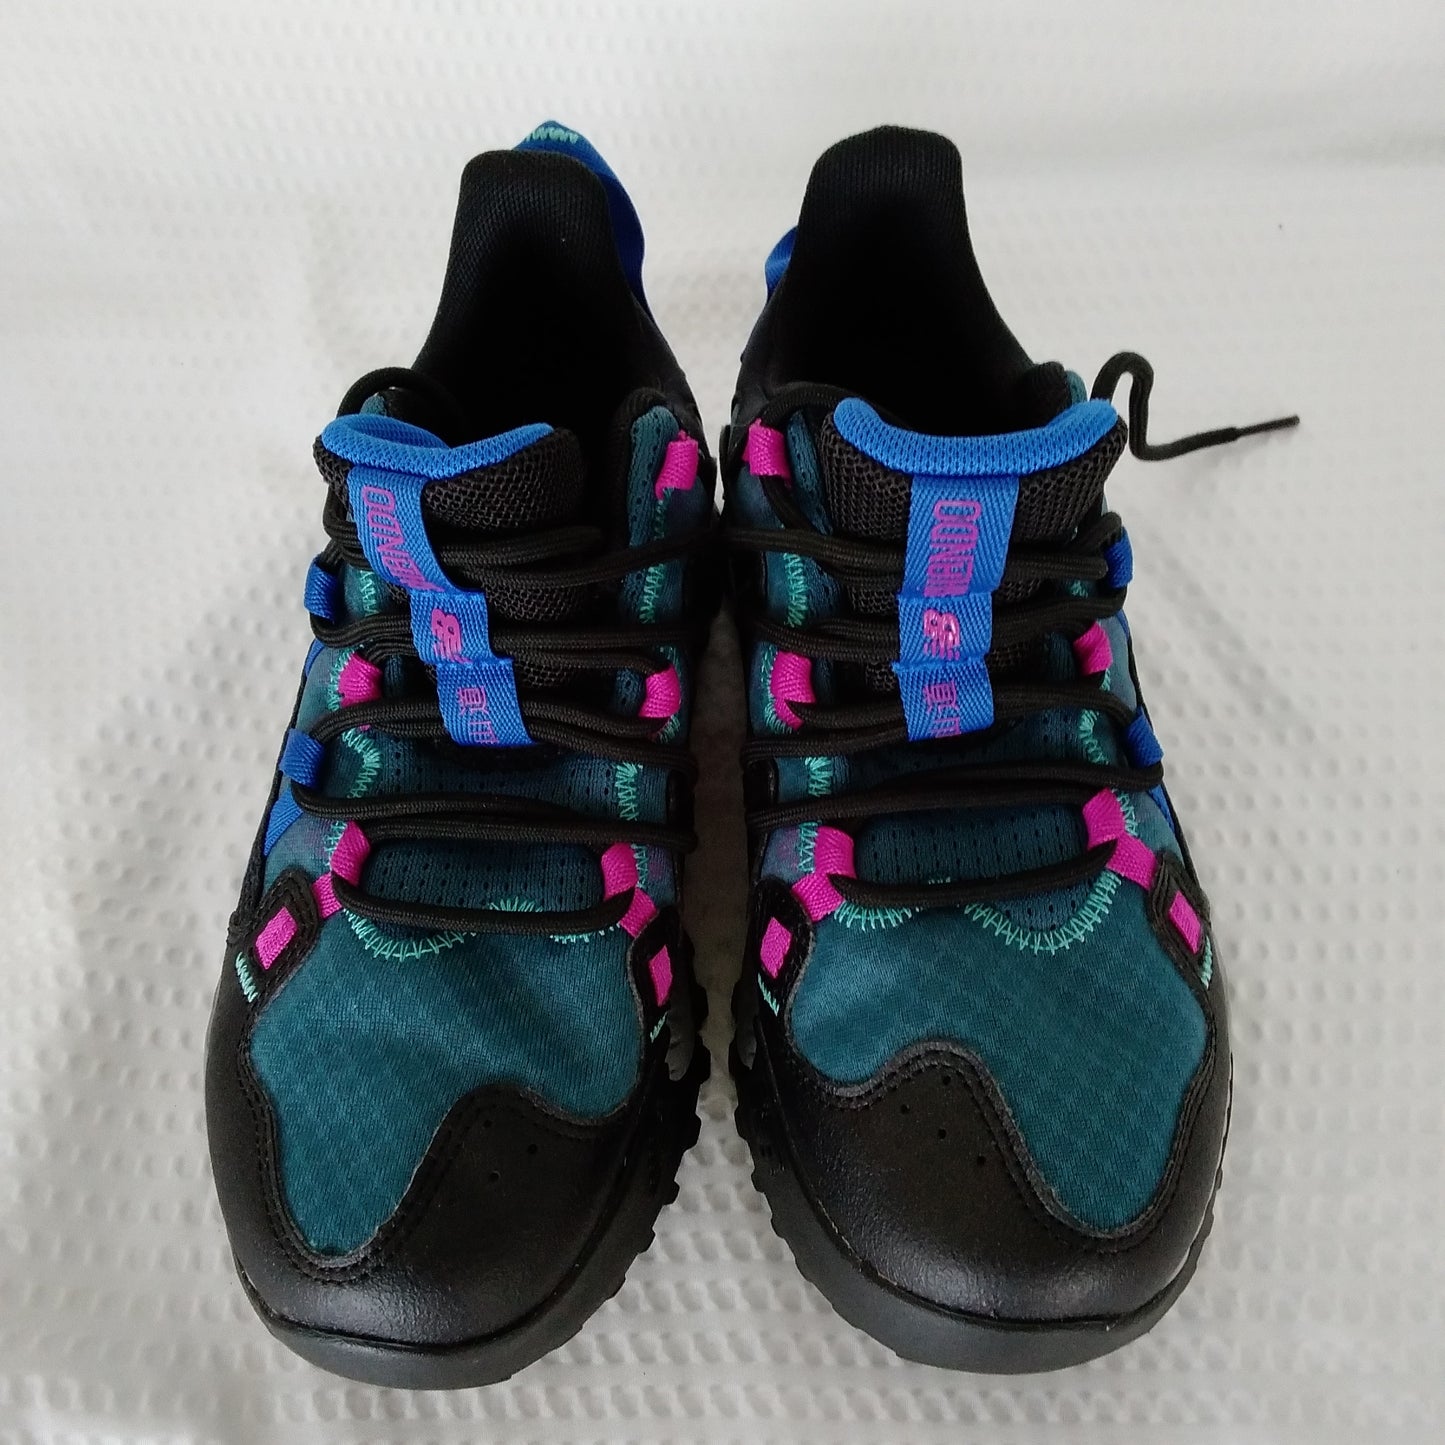 New Balance Women's Shando Shoes - Size 5.5 - NO BOX